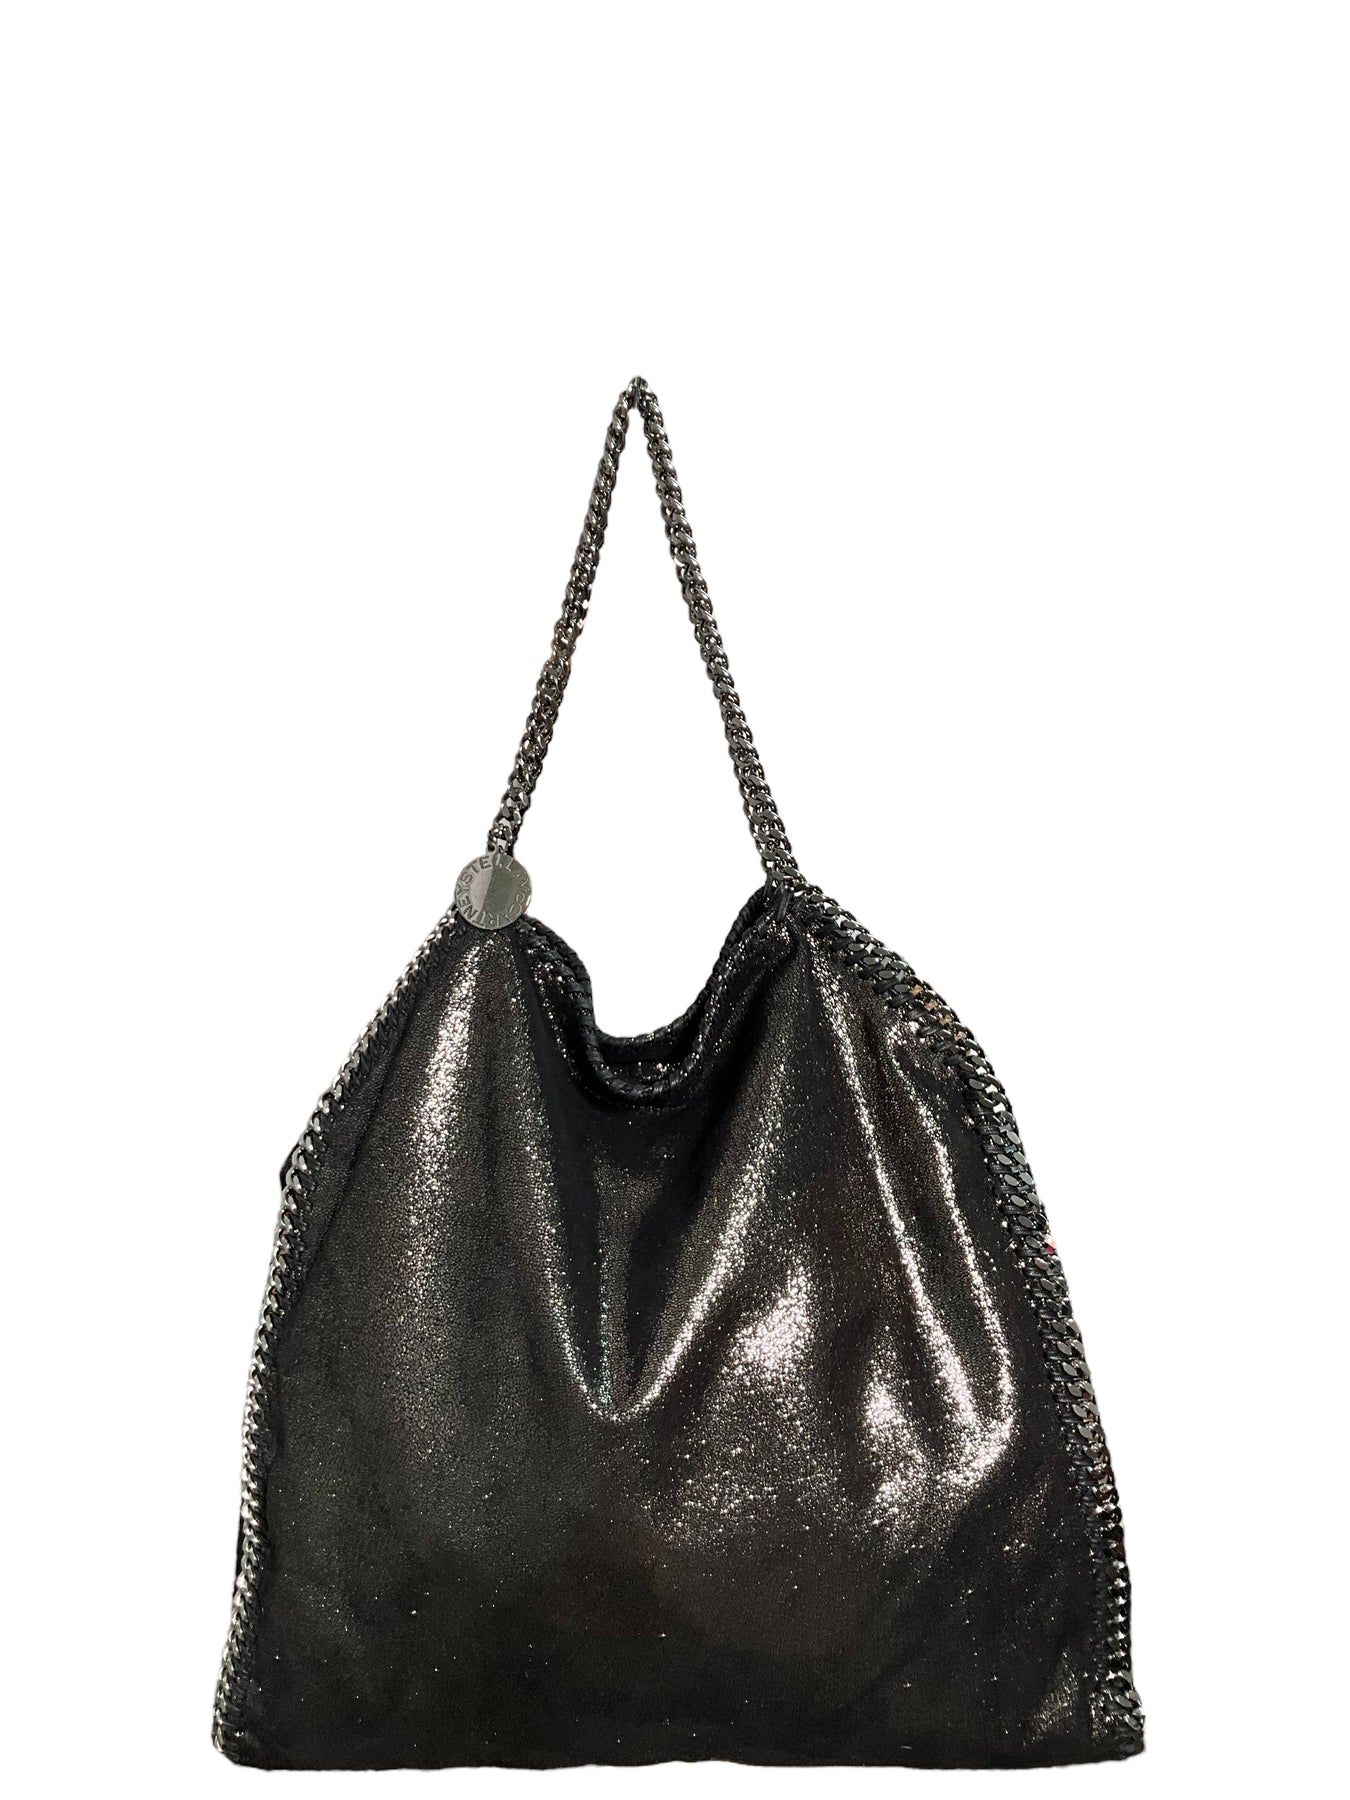 Black Patent leather Stella Tote Bag